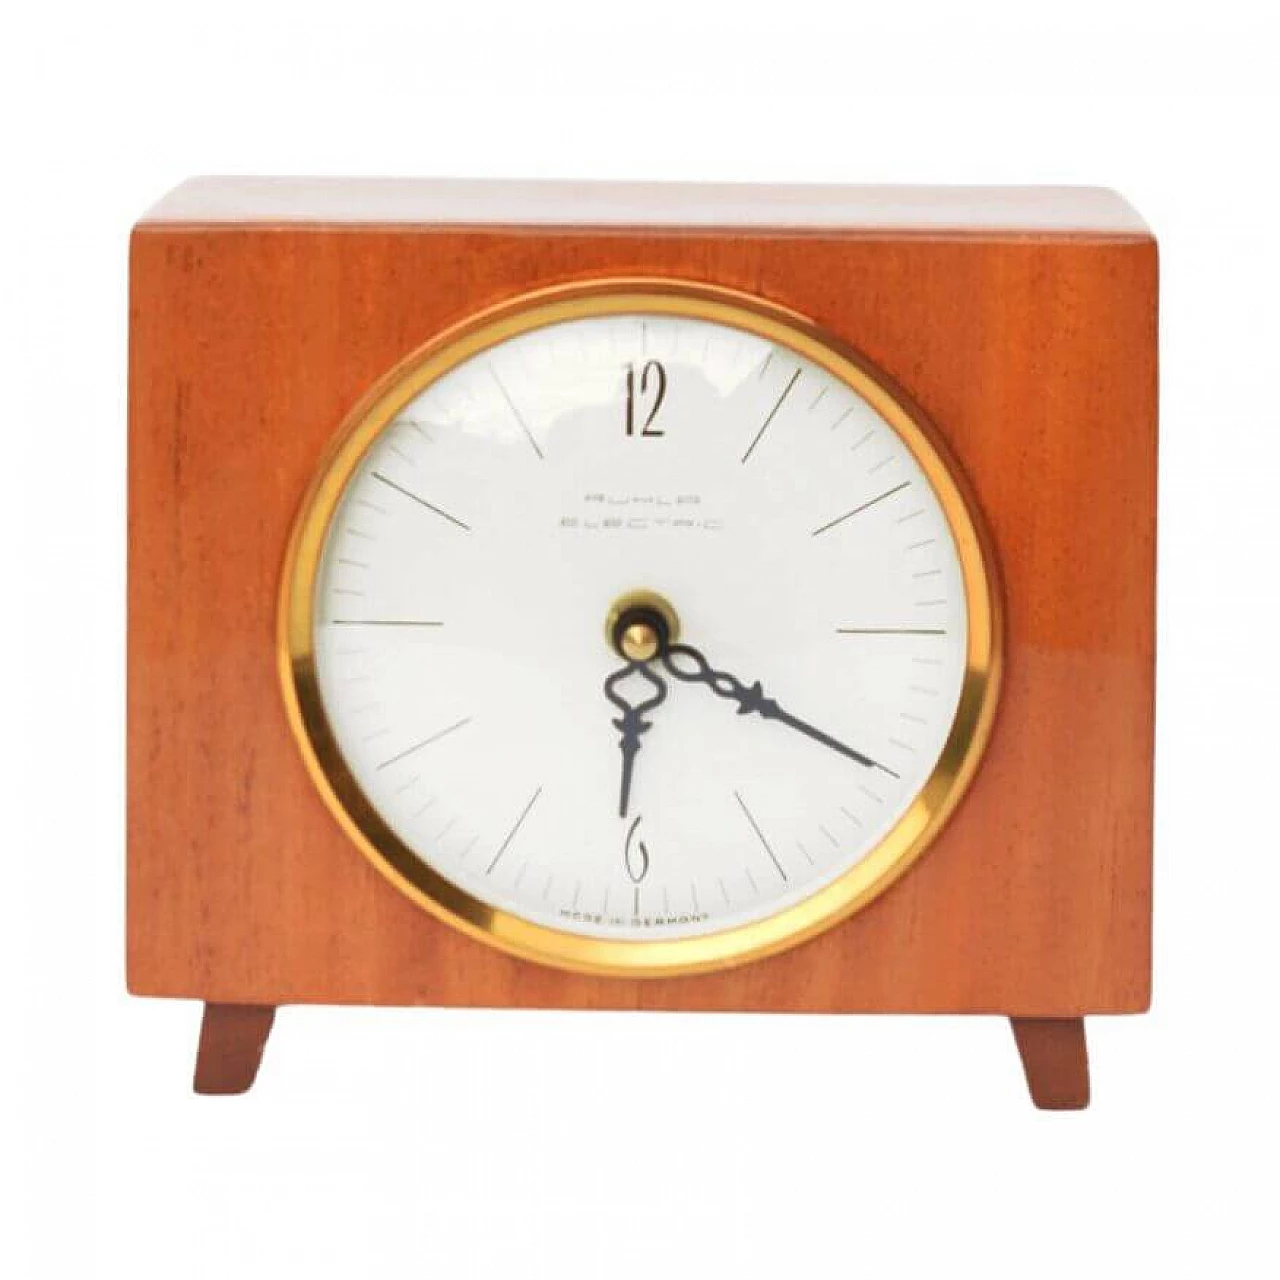 Mahogany veneered wood mantel clock by Ruhla, 1970s 6